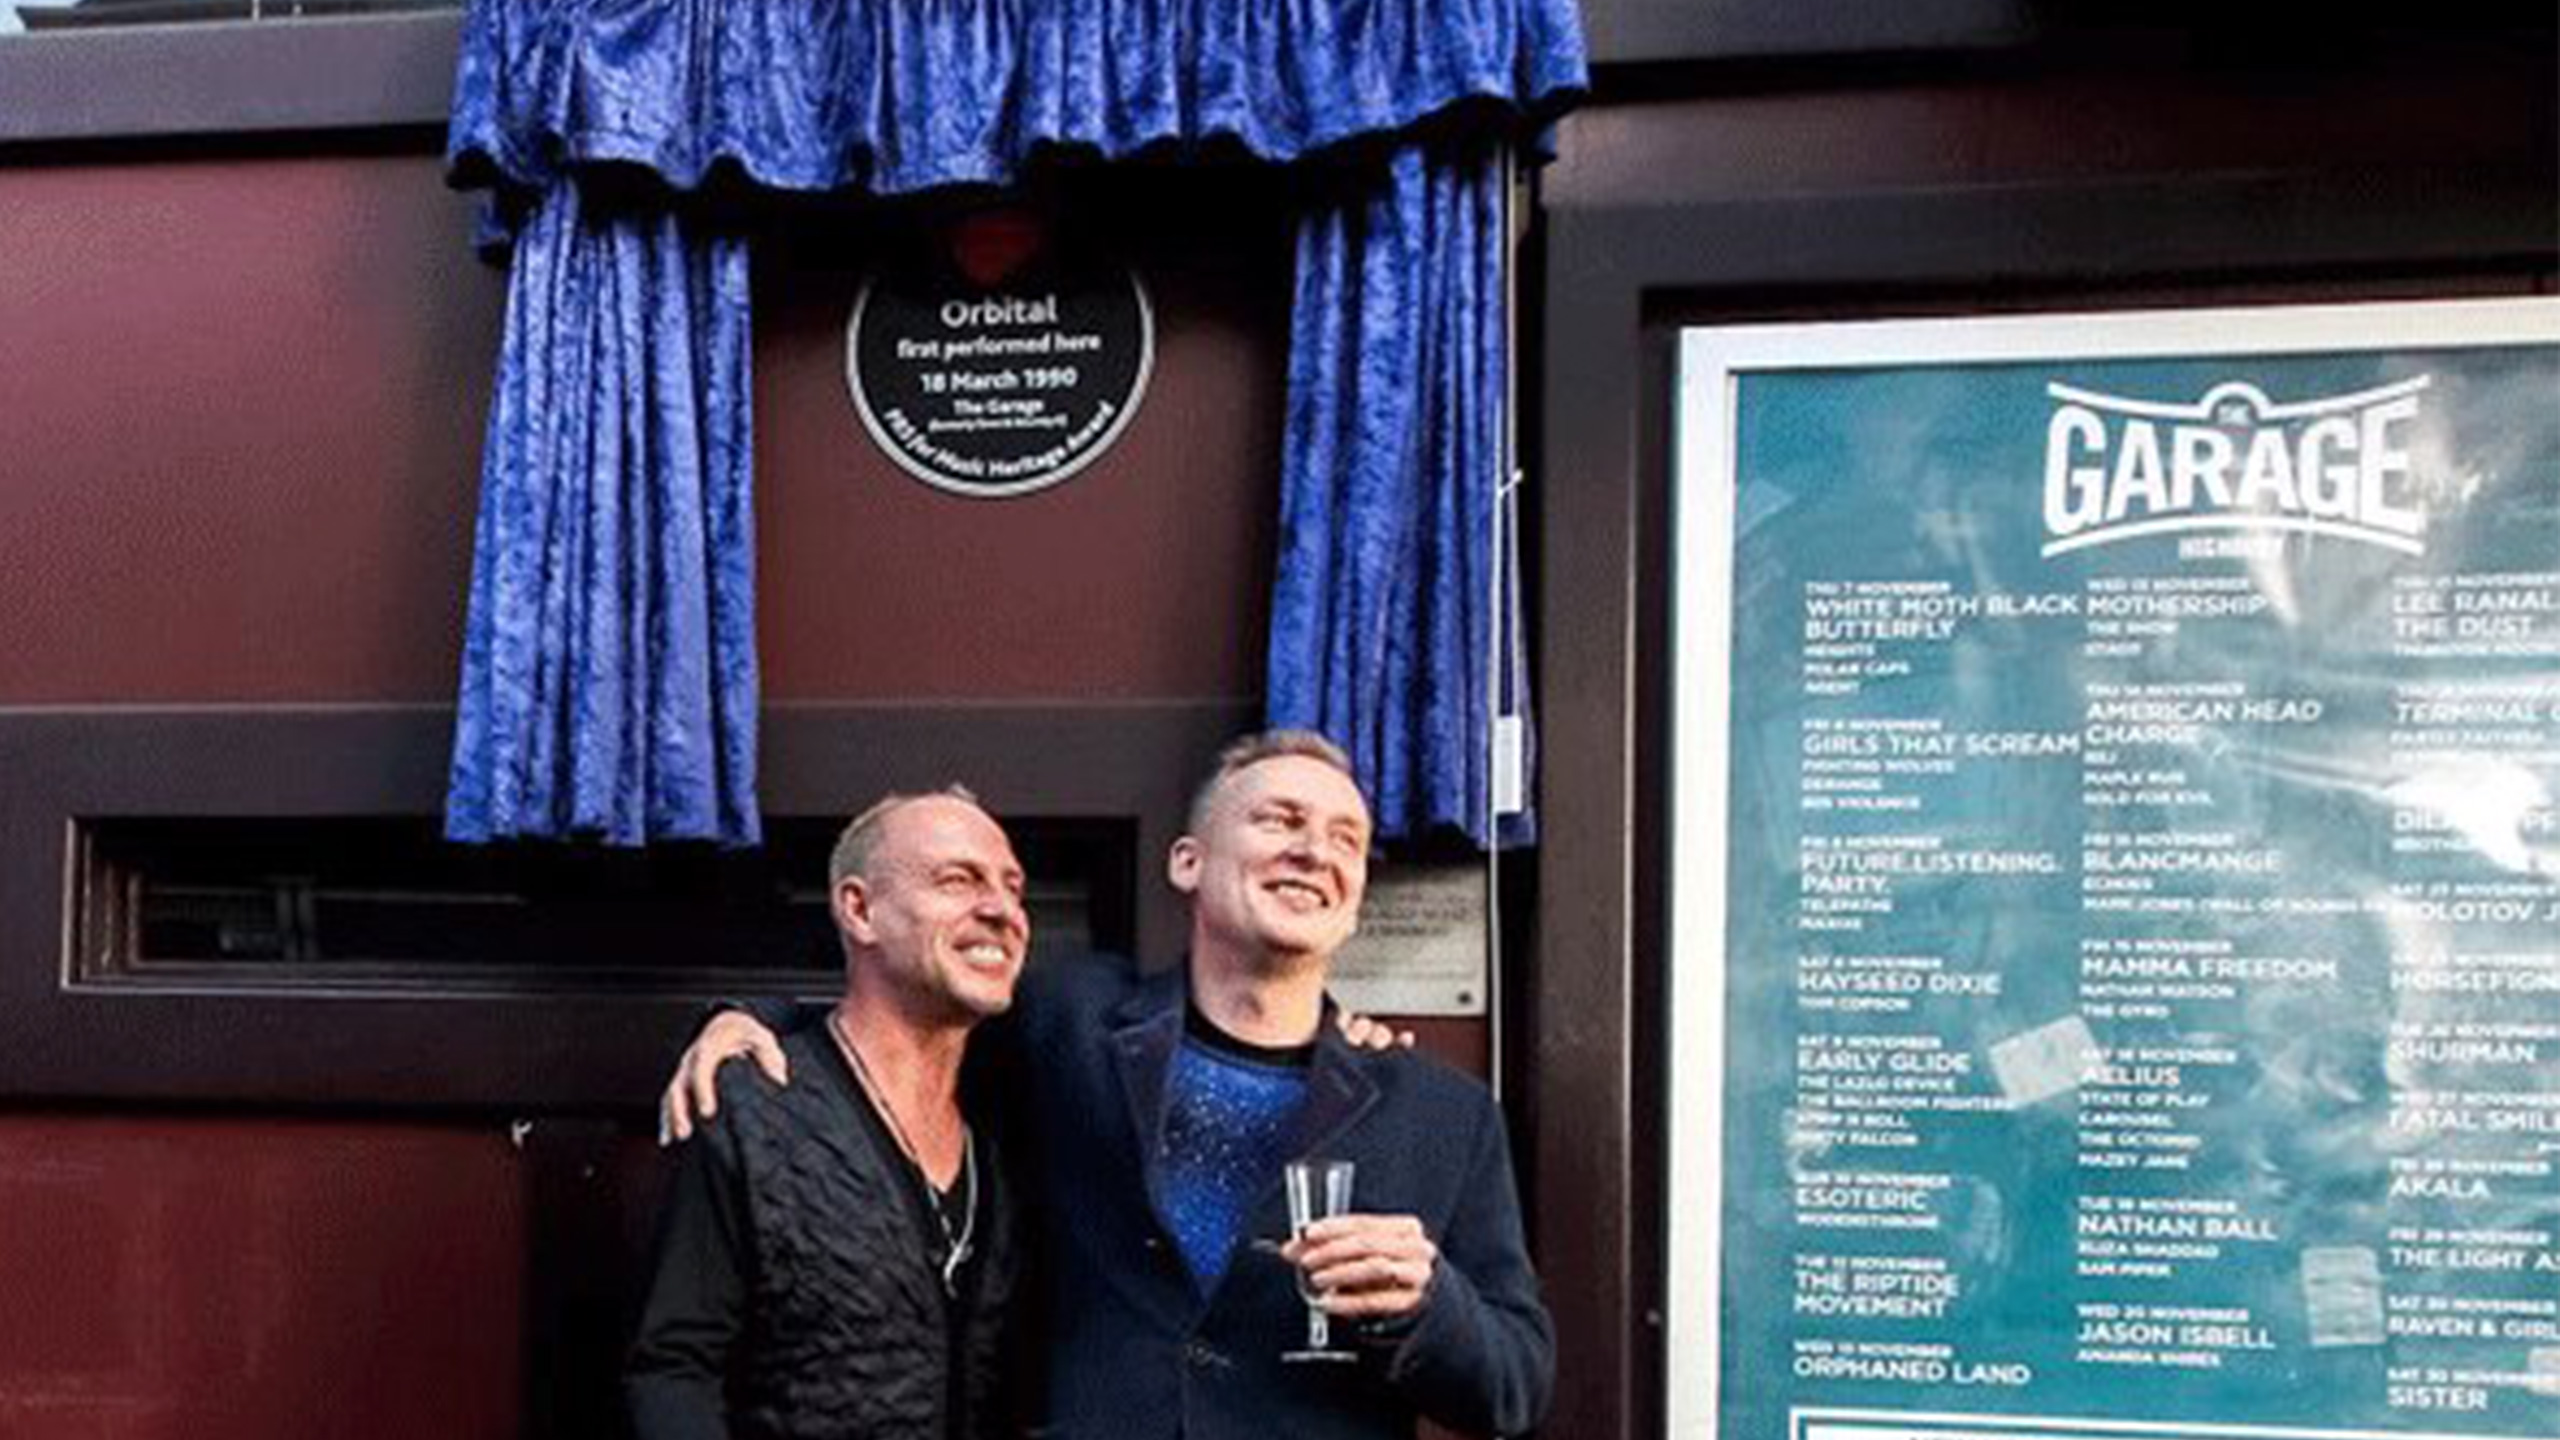 Phil and Paul Hartnoll of Orbital at The Garage in in Highbury, celebrating their Heritage Award